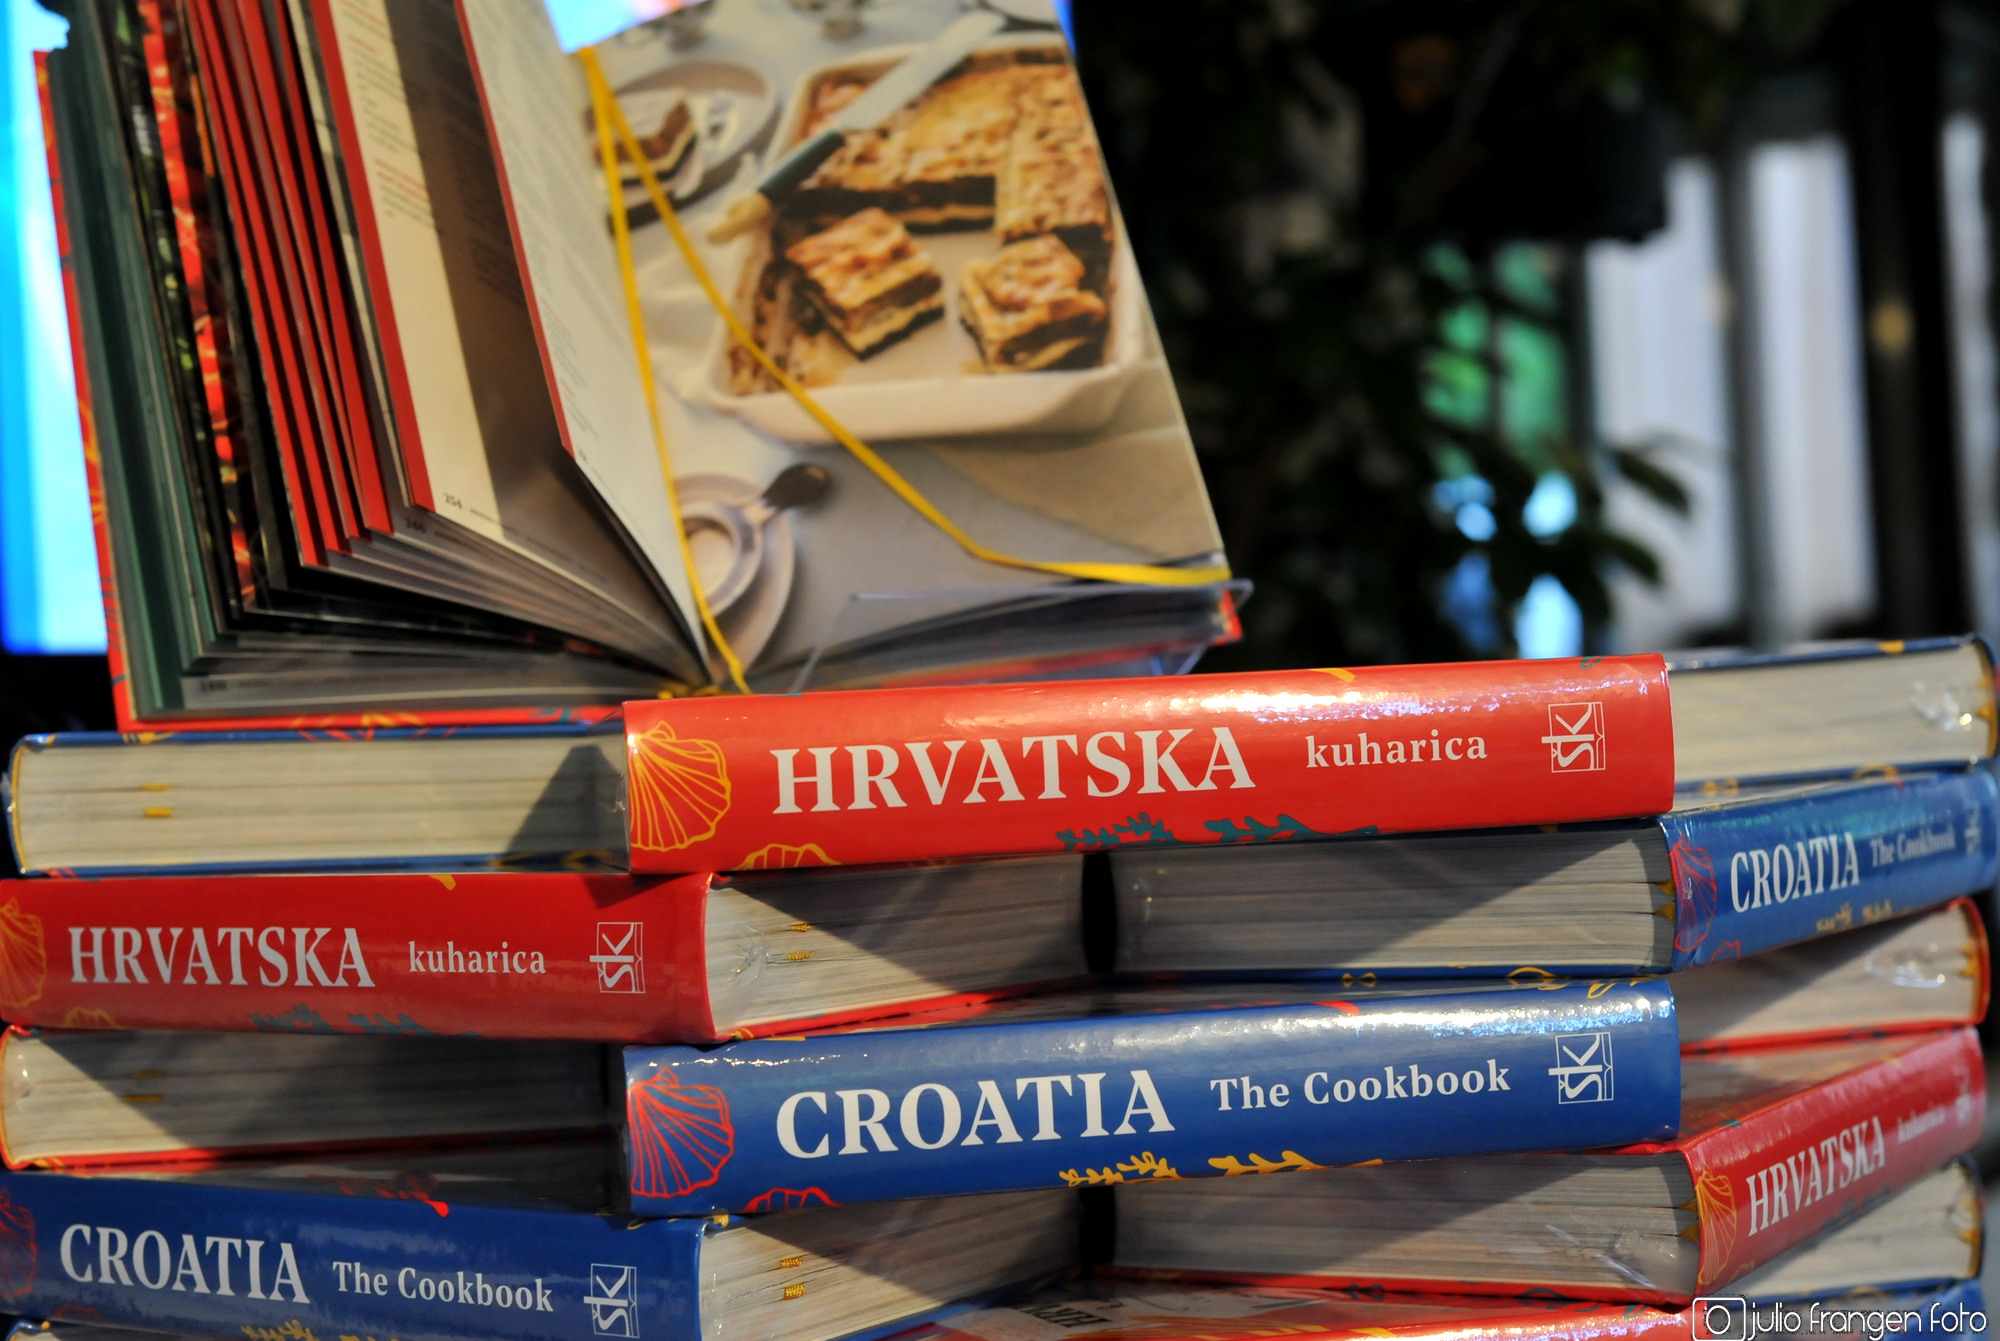 Croatia: The Cookbook!